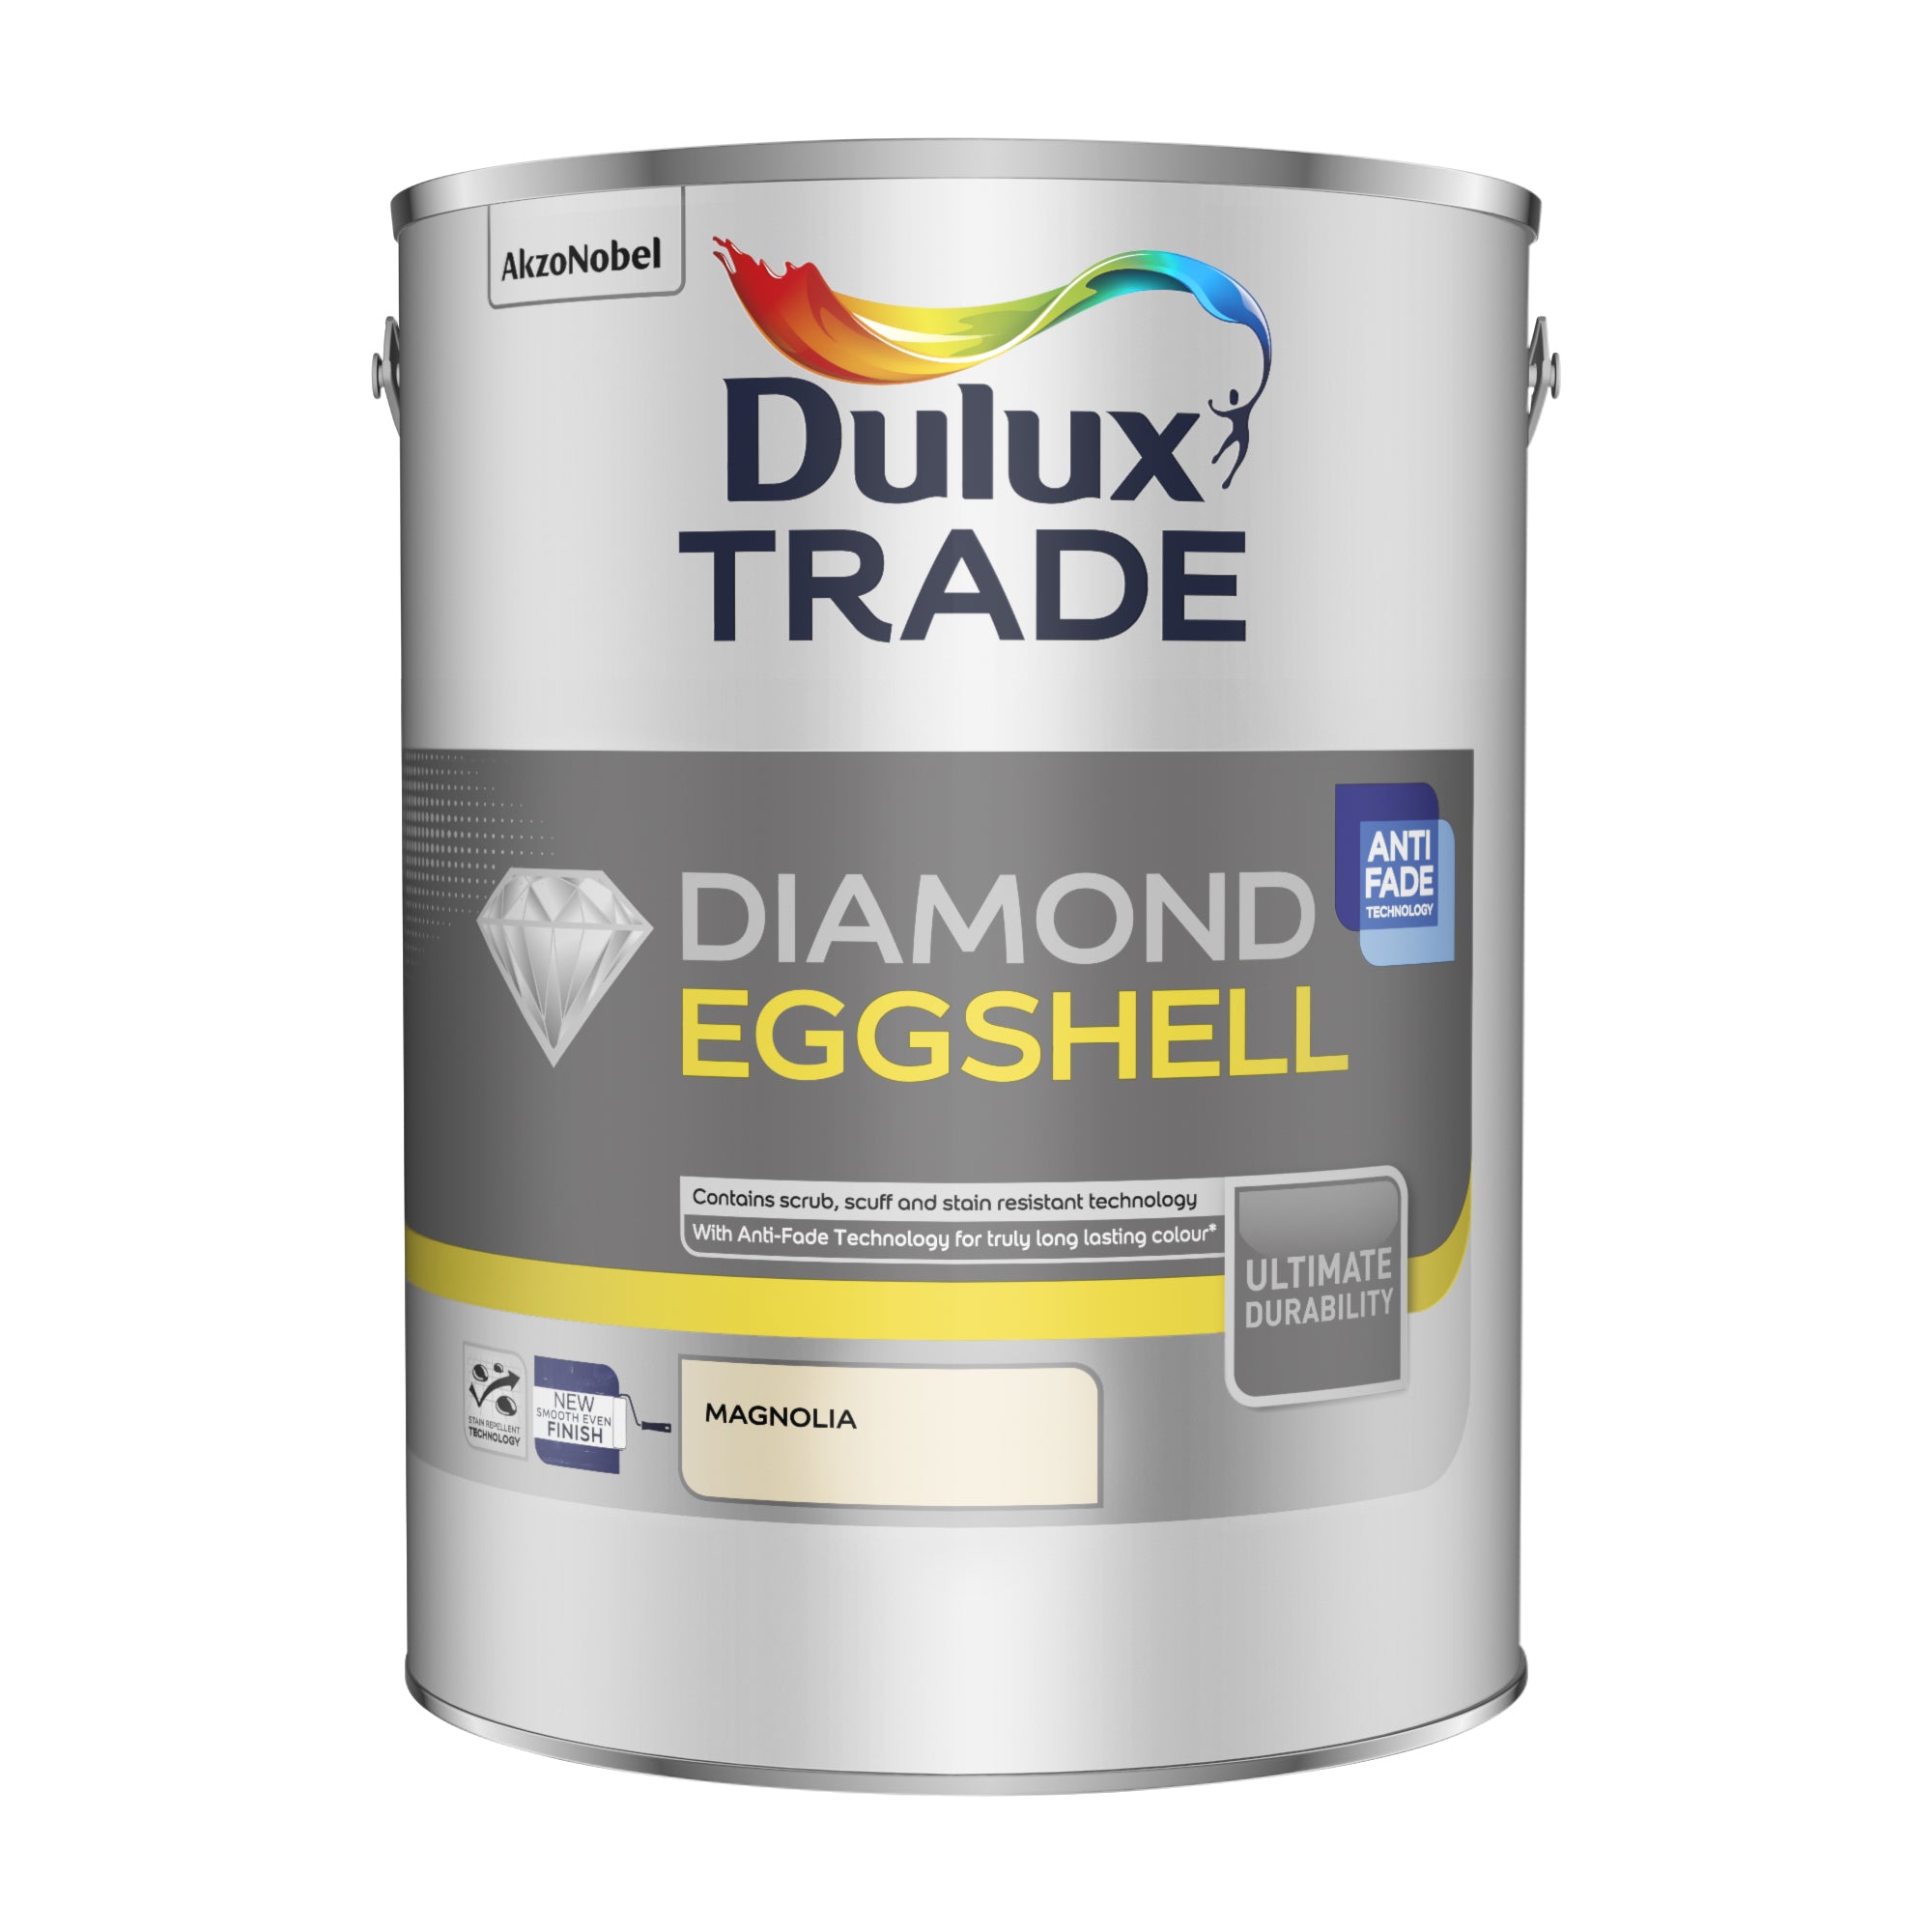 Dulux Trade Diamond Eggshell Magnolia 5L